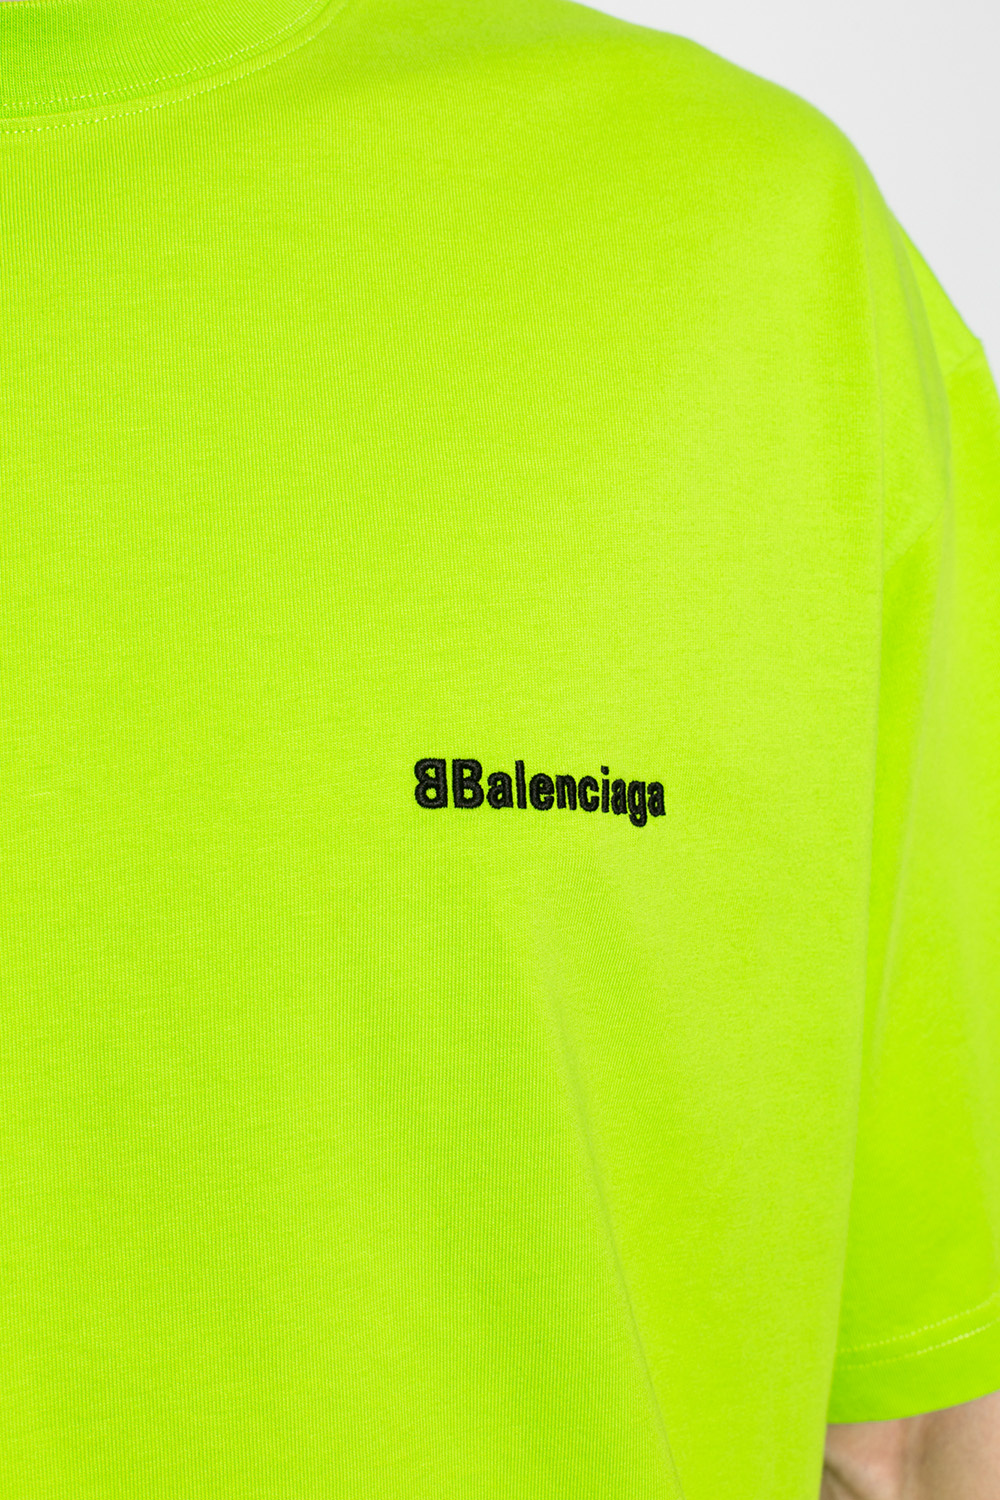 M Balenciaga Green Logo TShirt  eBay